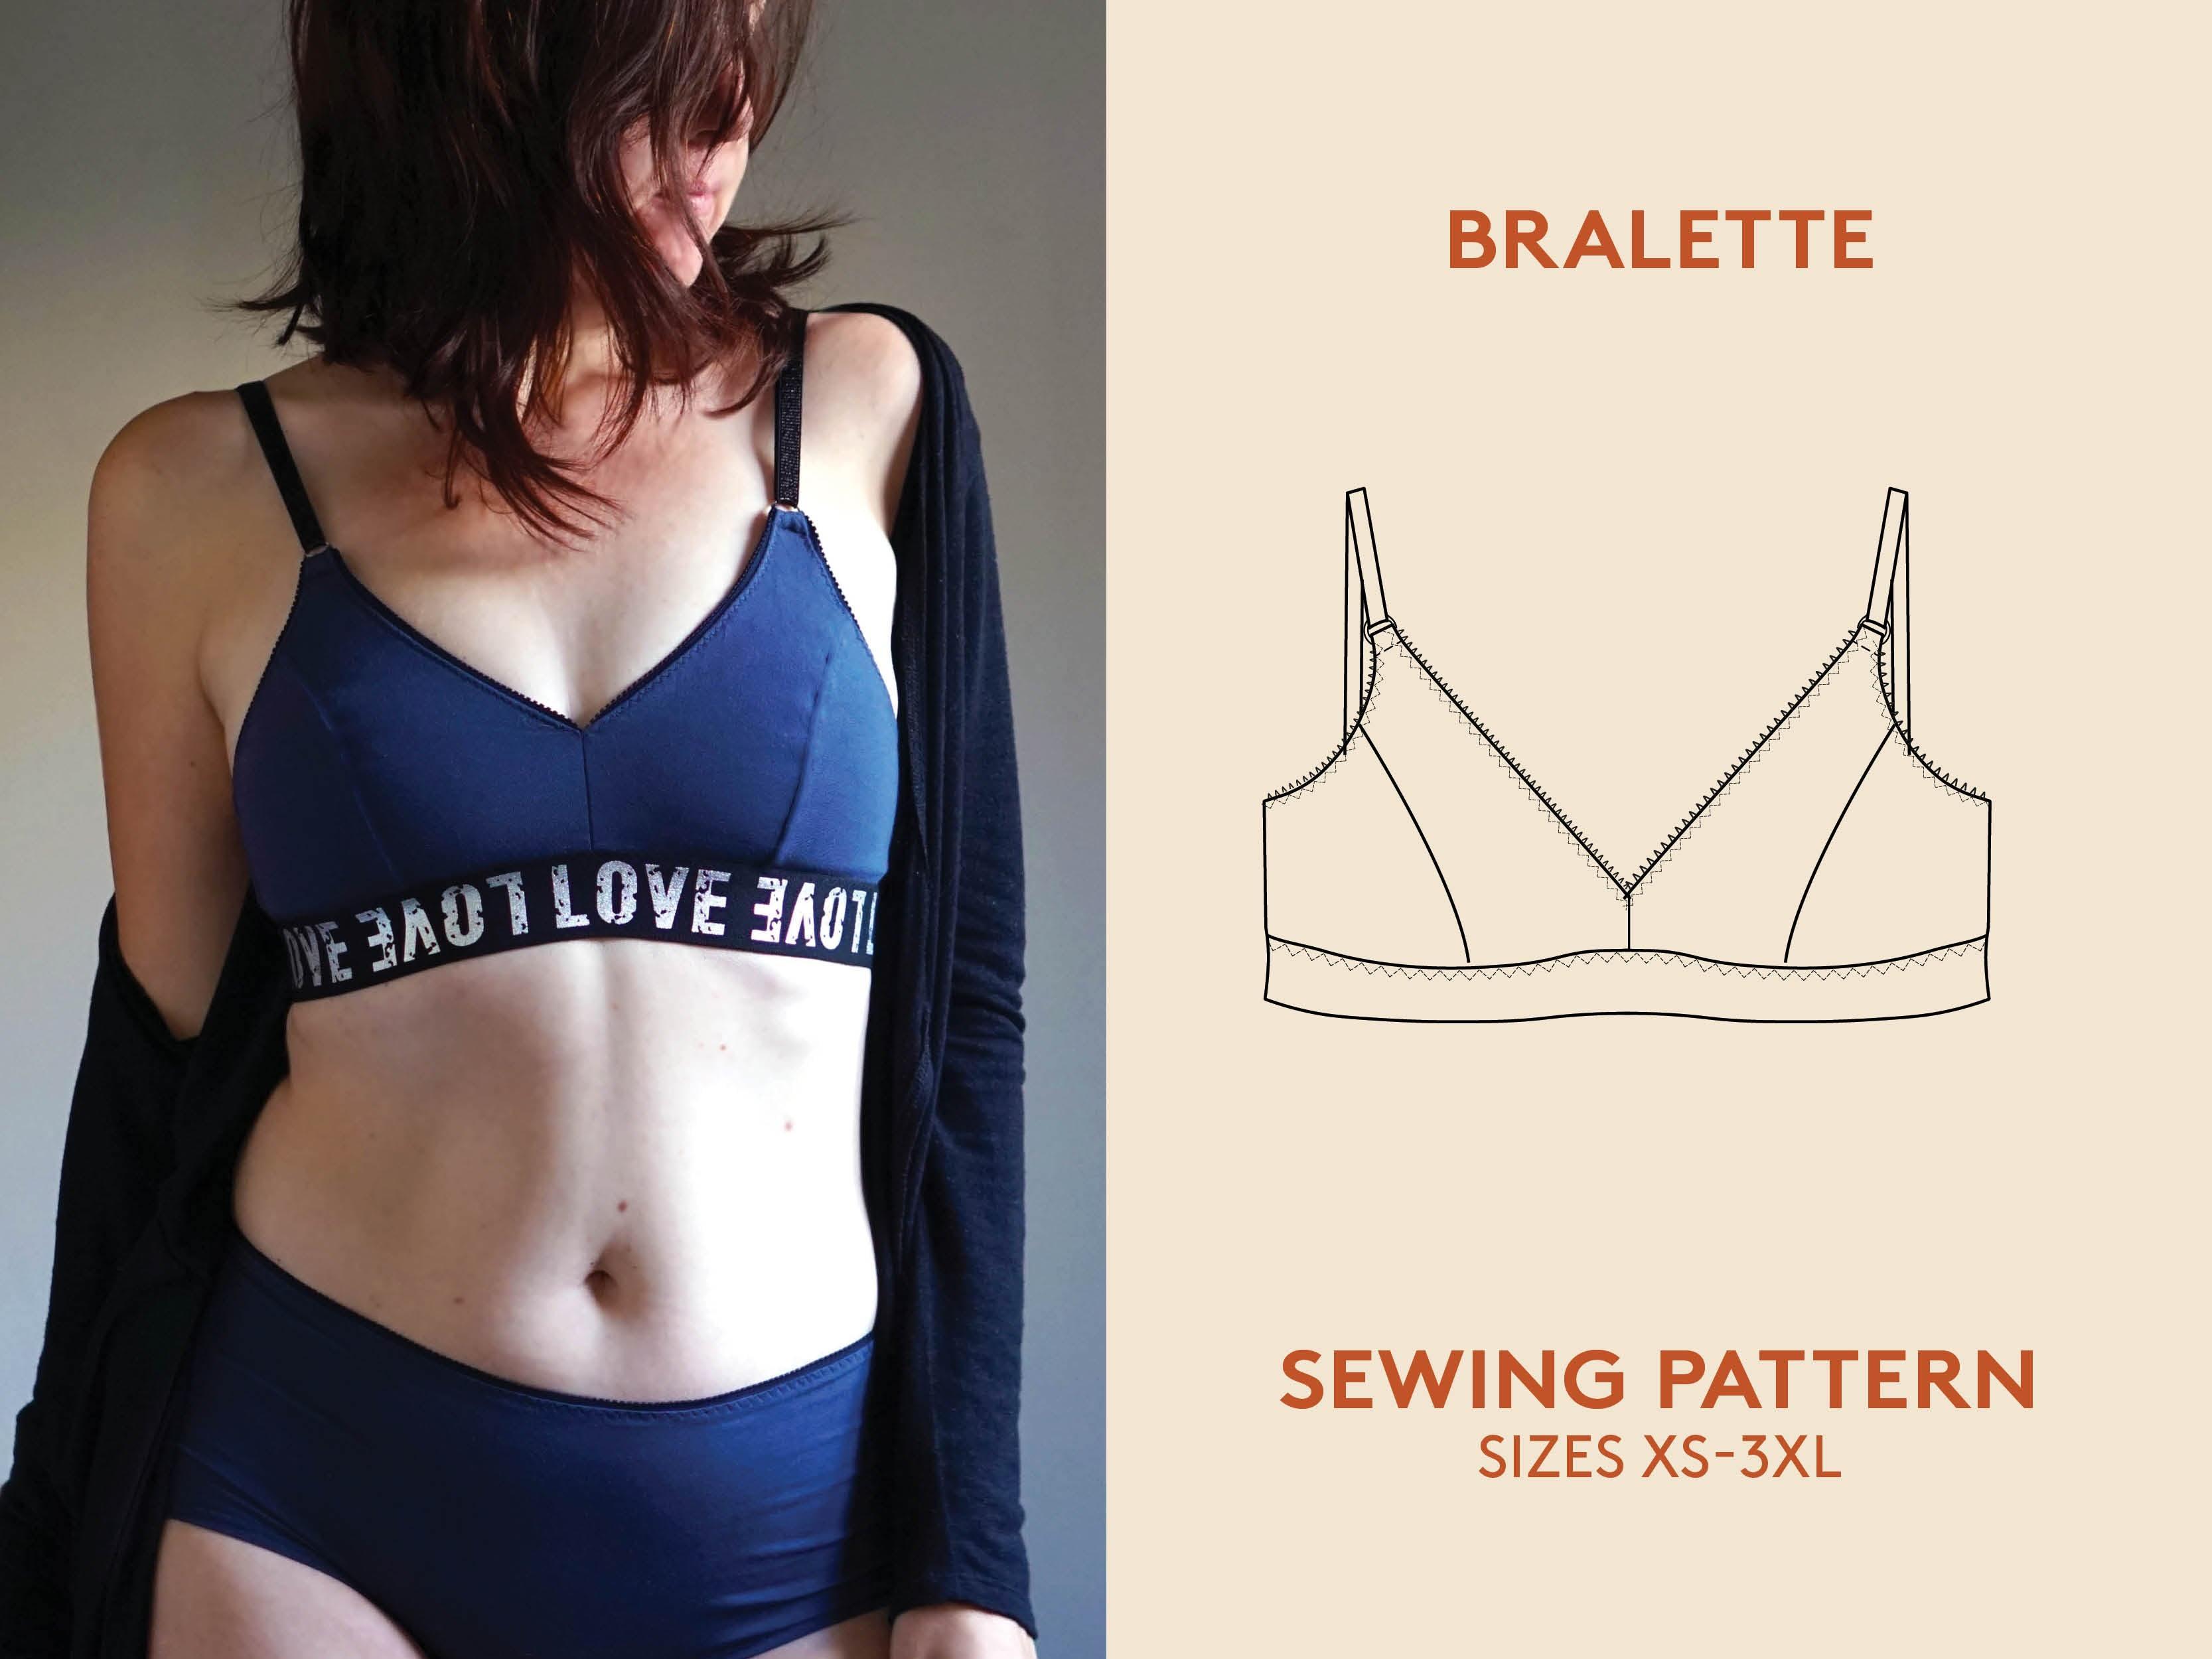 Plus size bra sewing pattern, Cotton underwear pattern